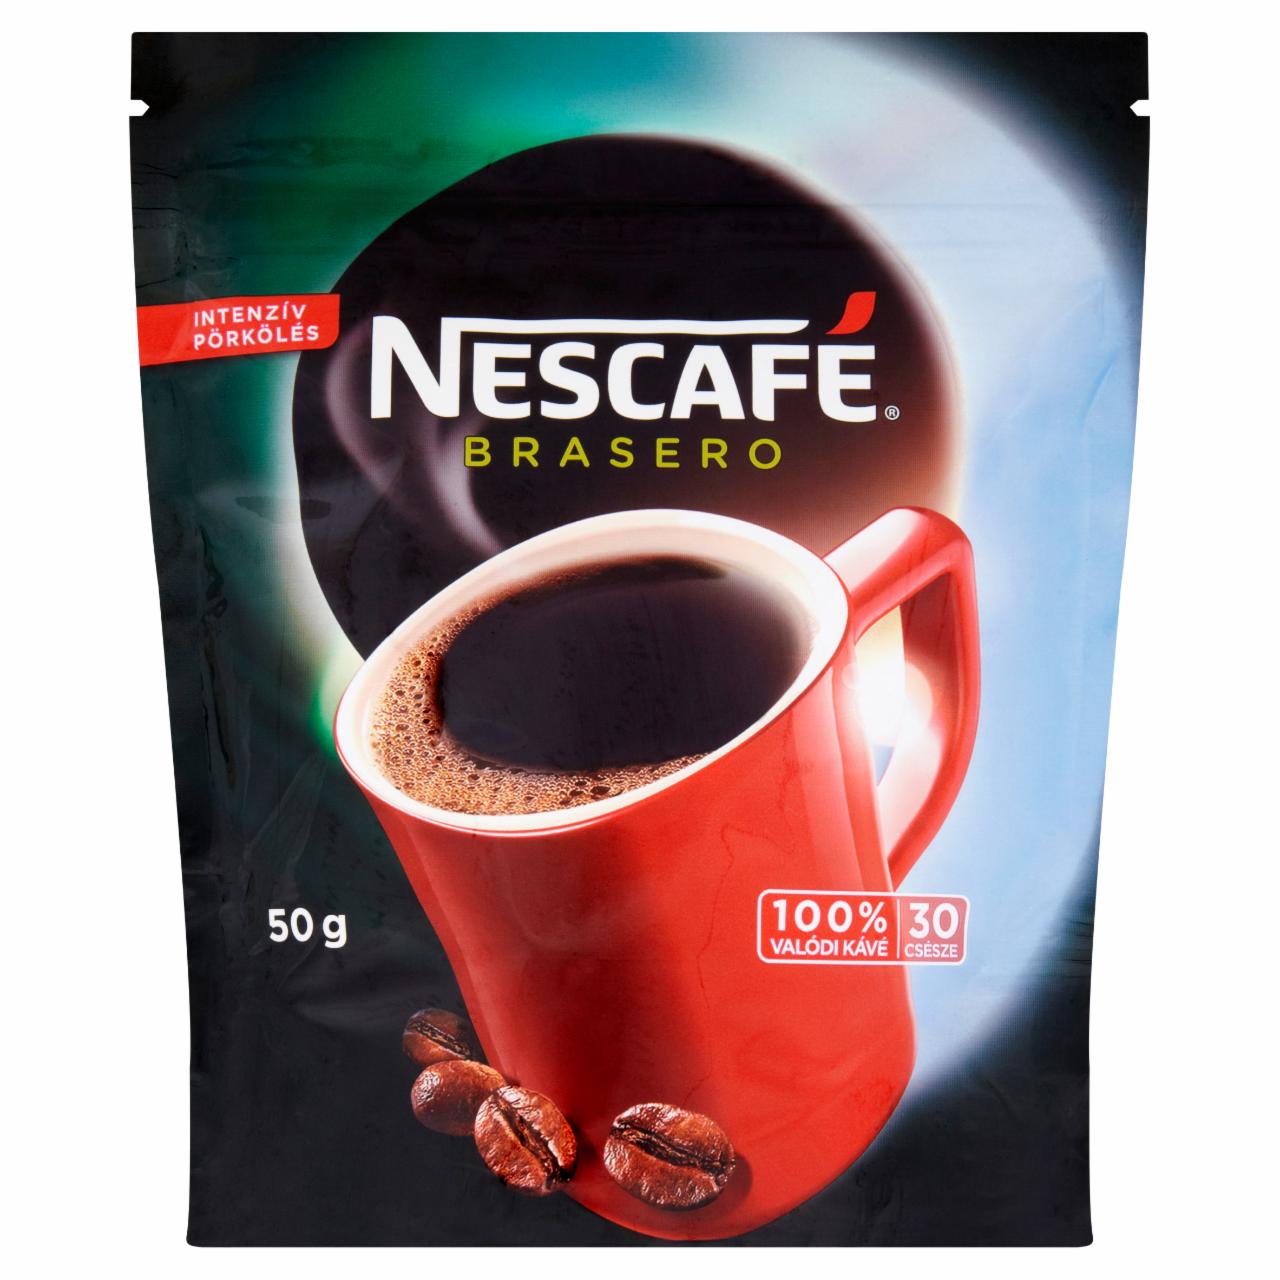 Képek - Nescafé Brasero azonnal oldódó kávé 50 g